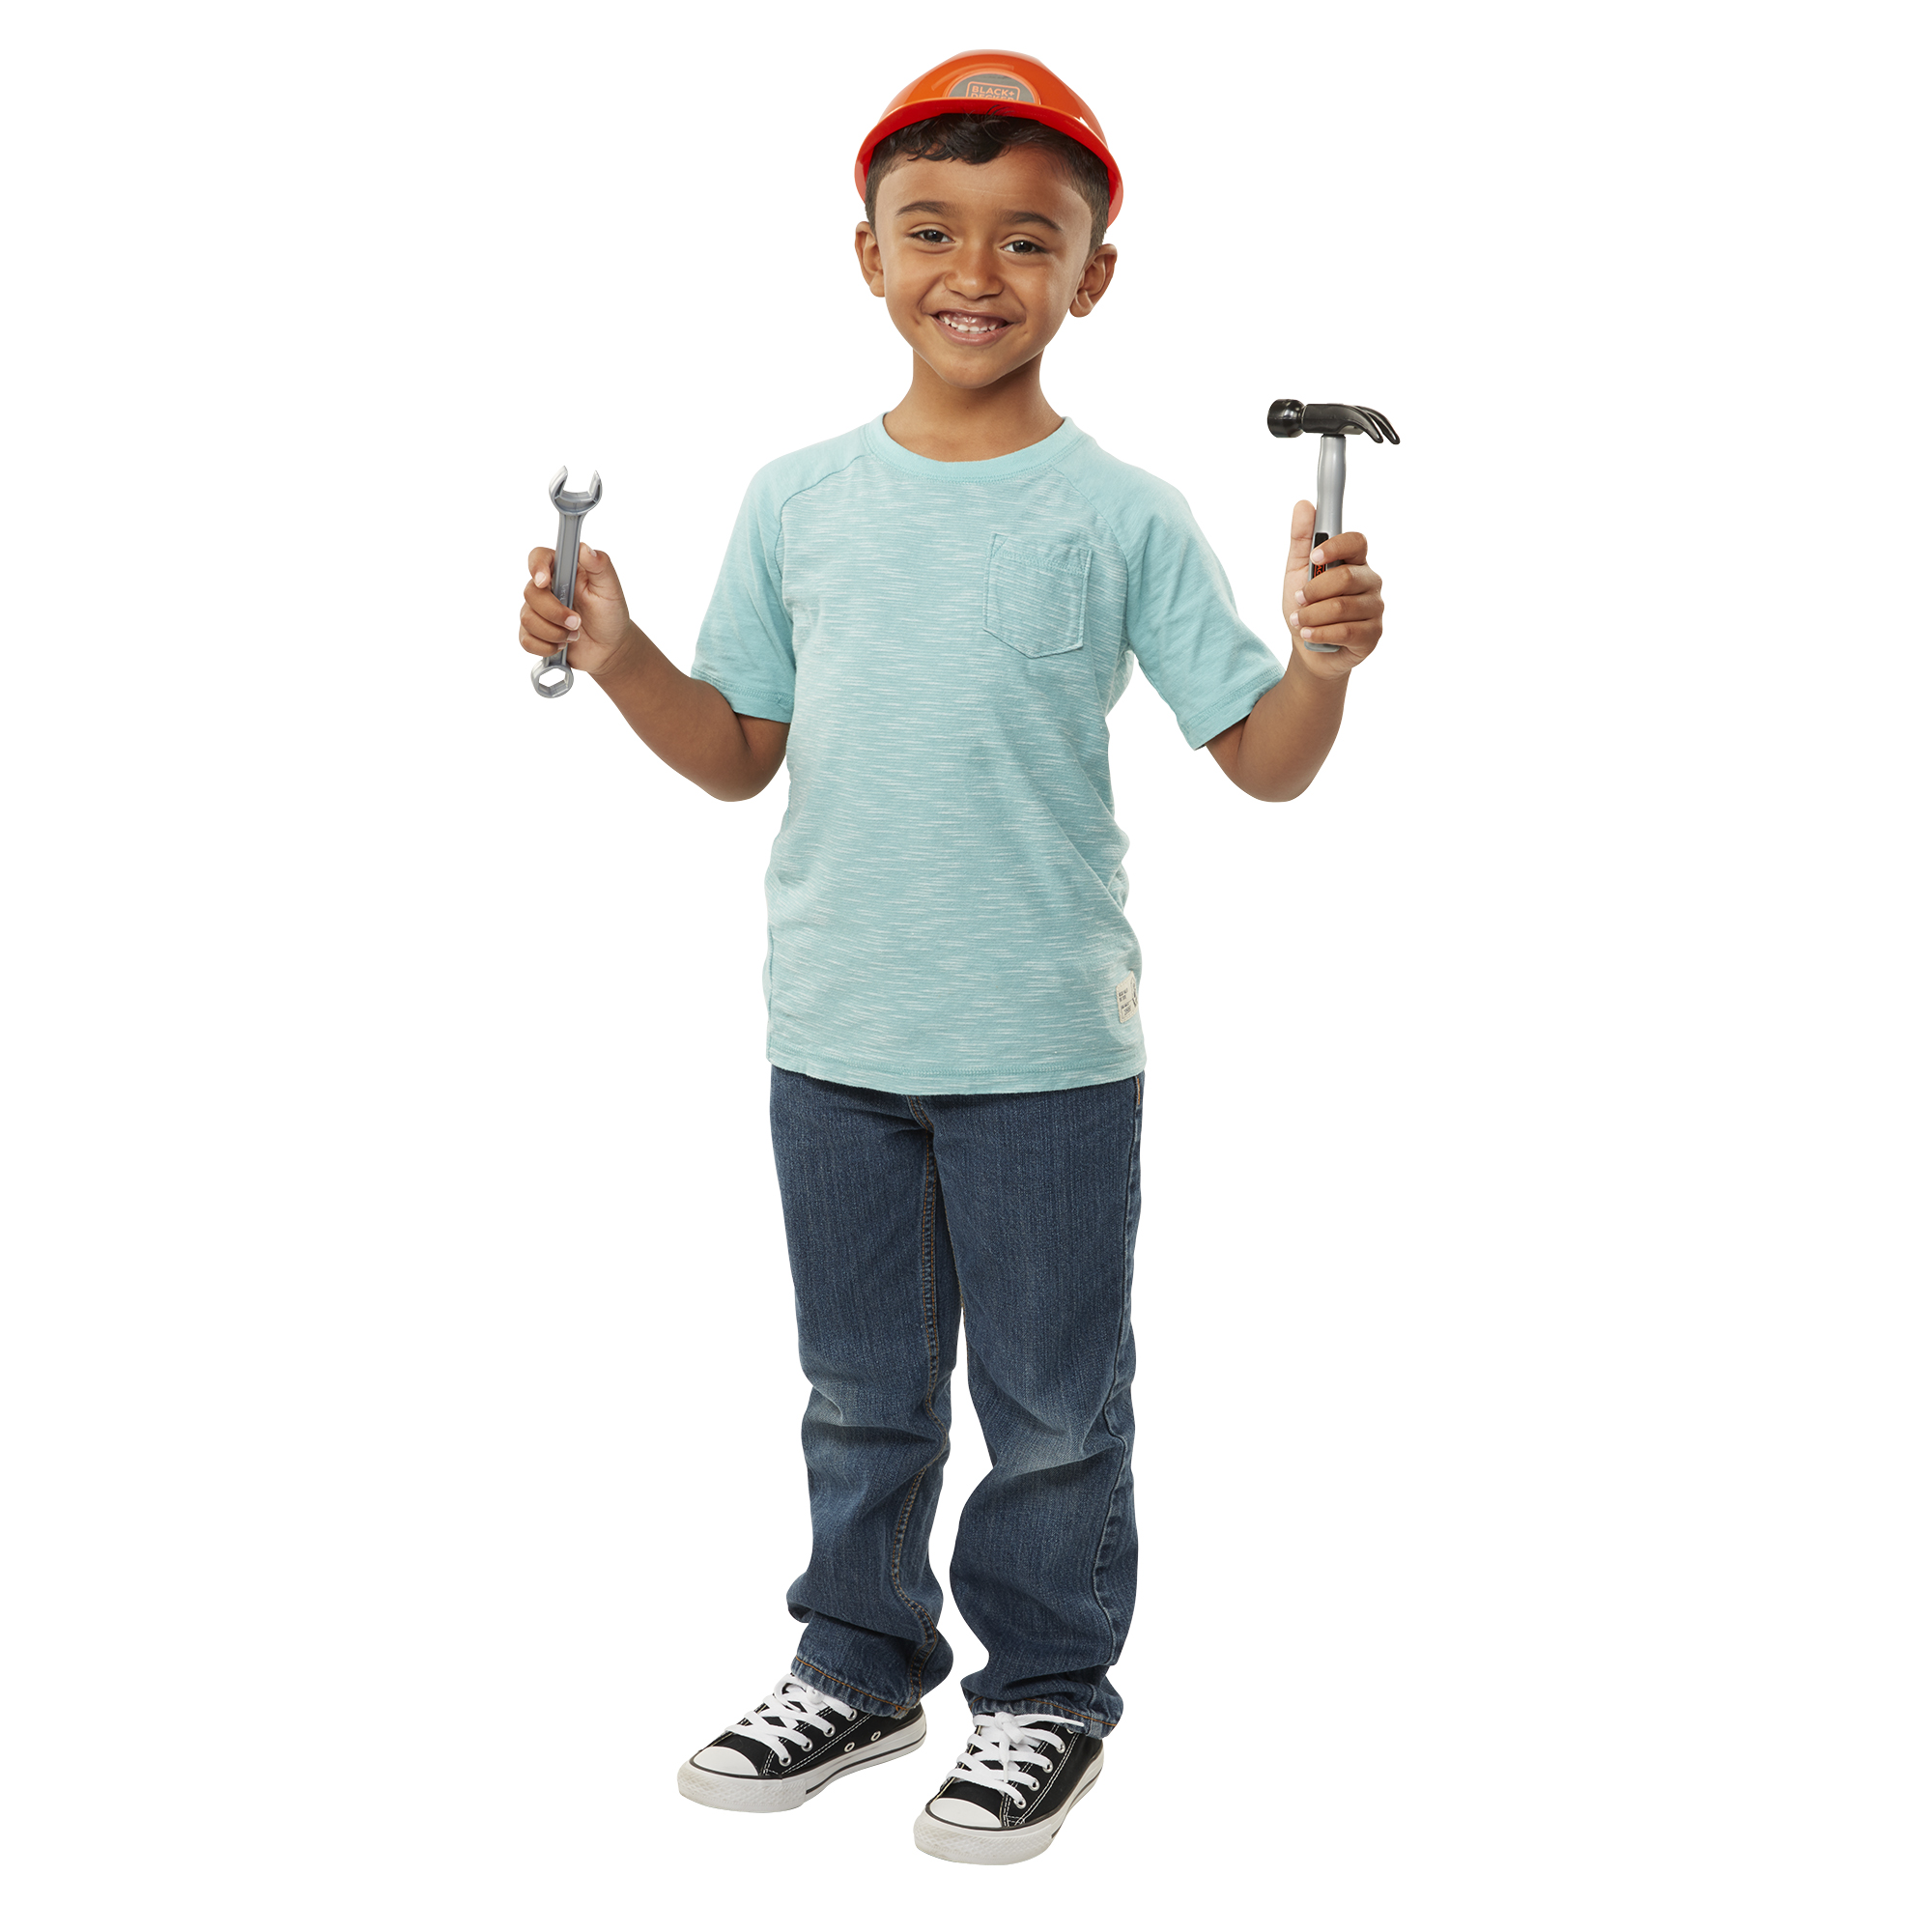 Junior Ready to Build Workbench - JAKKS Pacific, Inc.